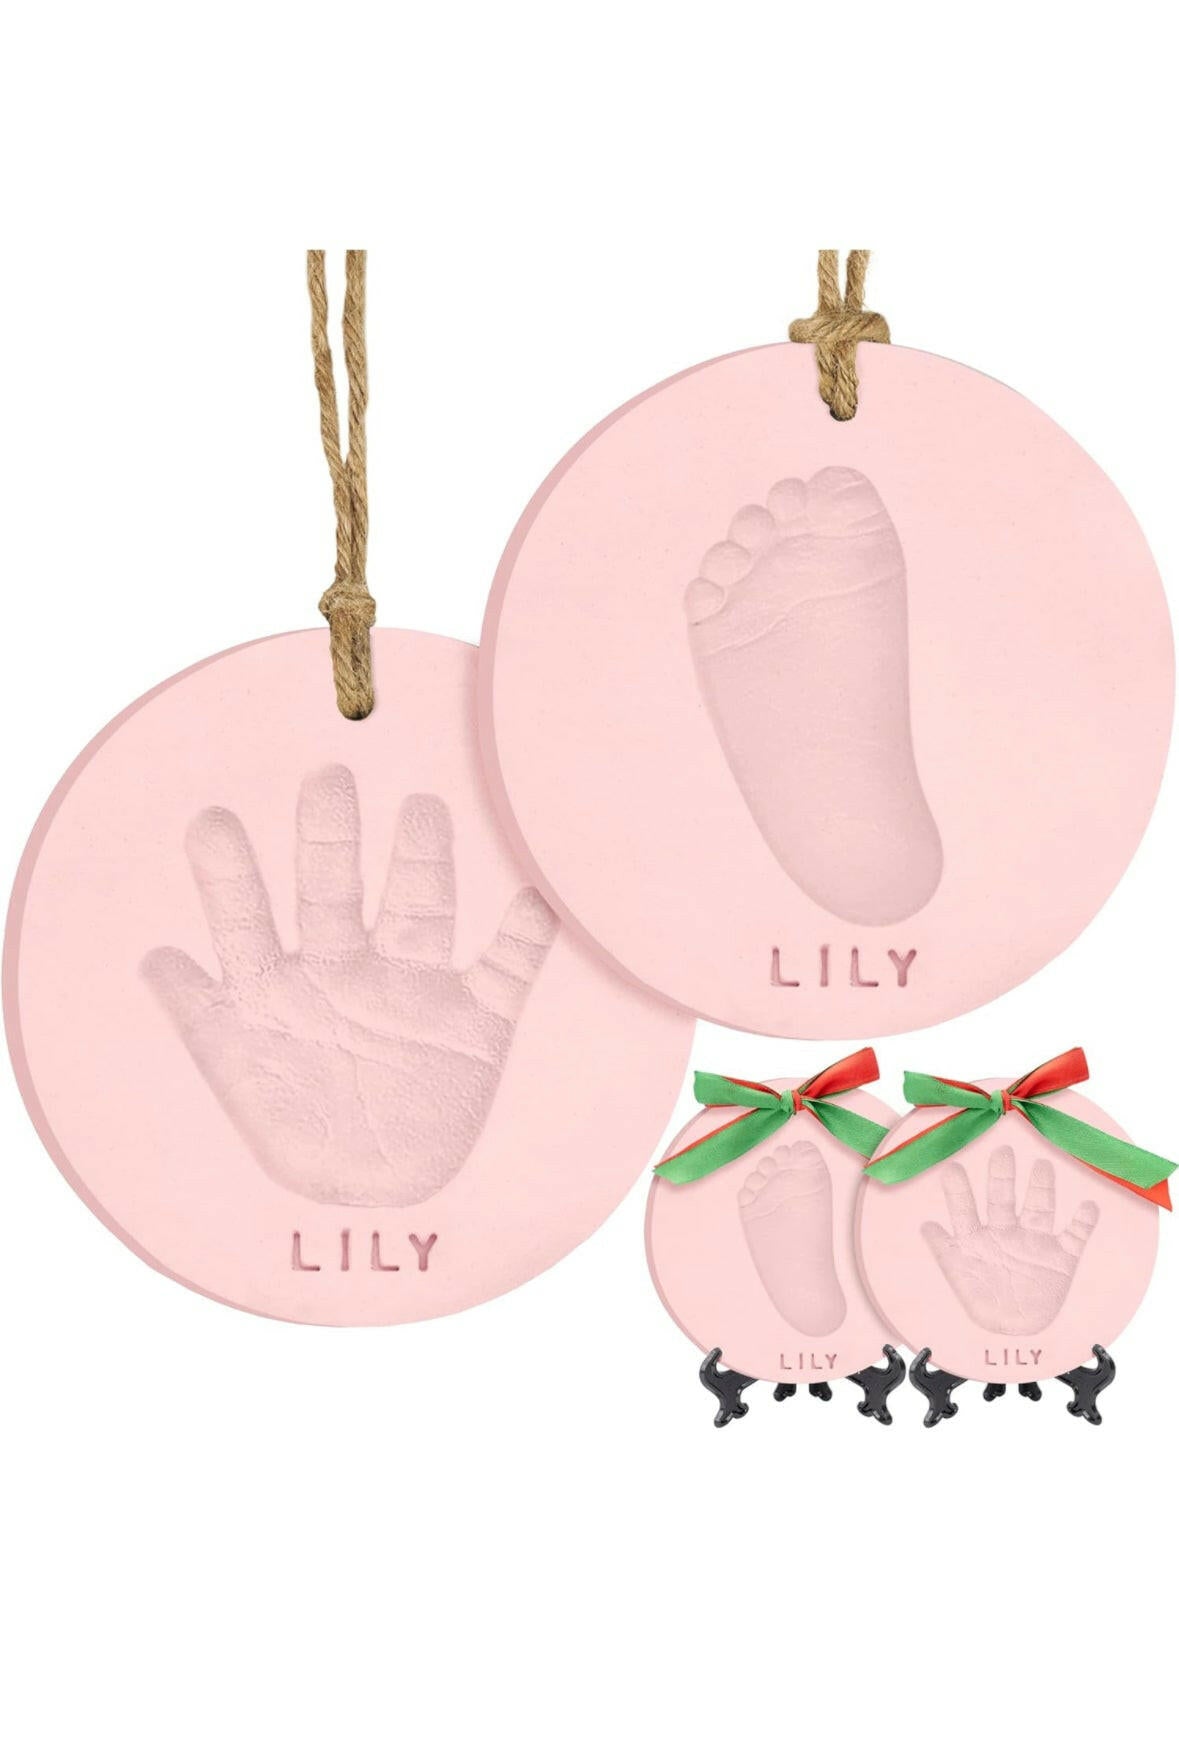 Baby Hand and Footprint Kit.